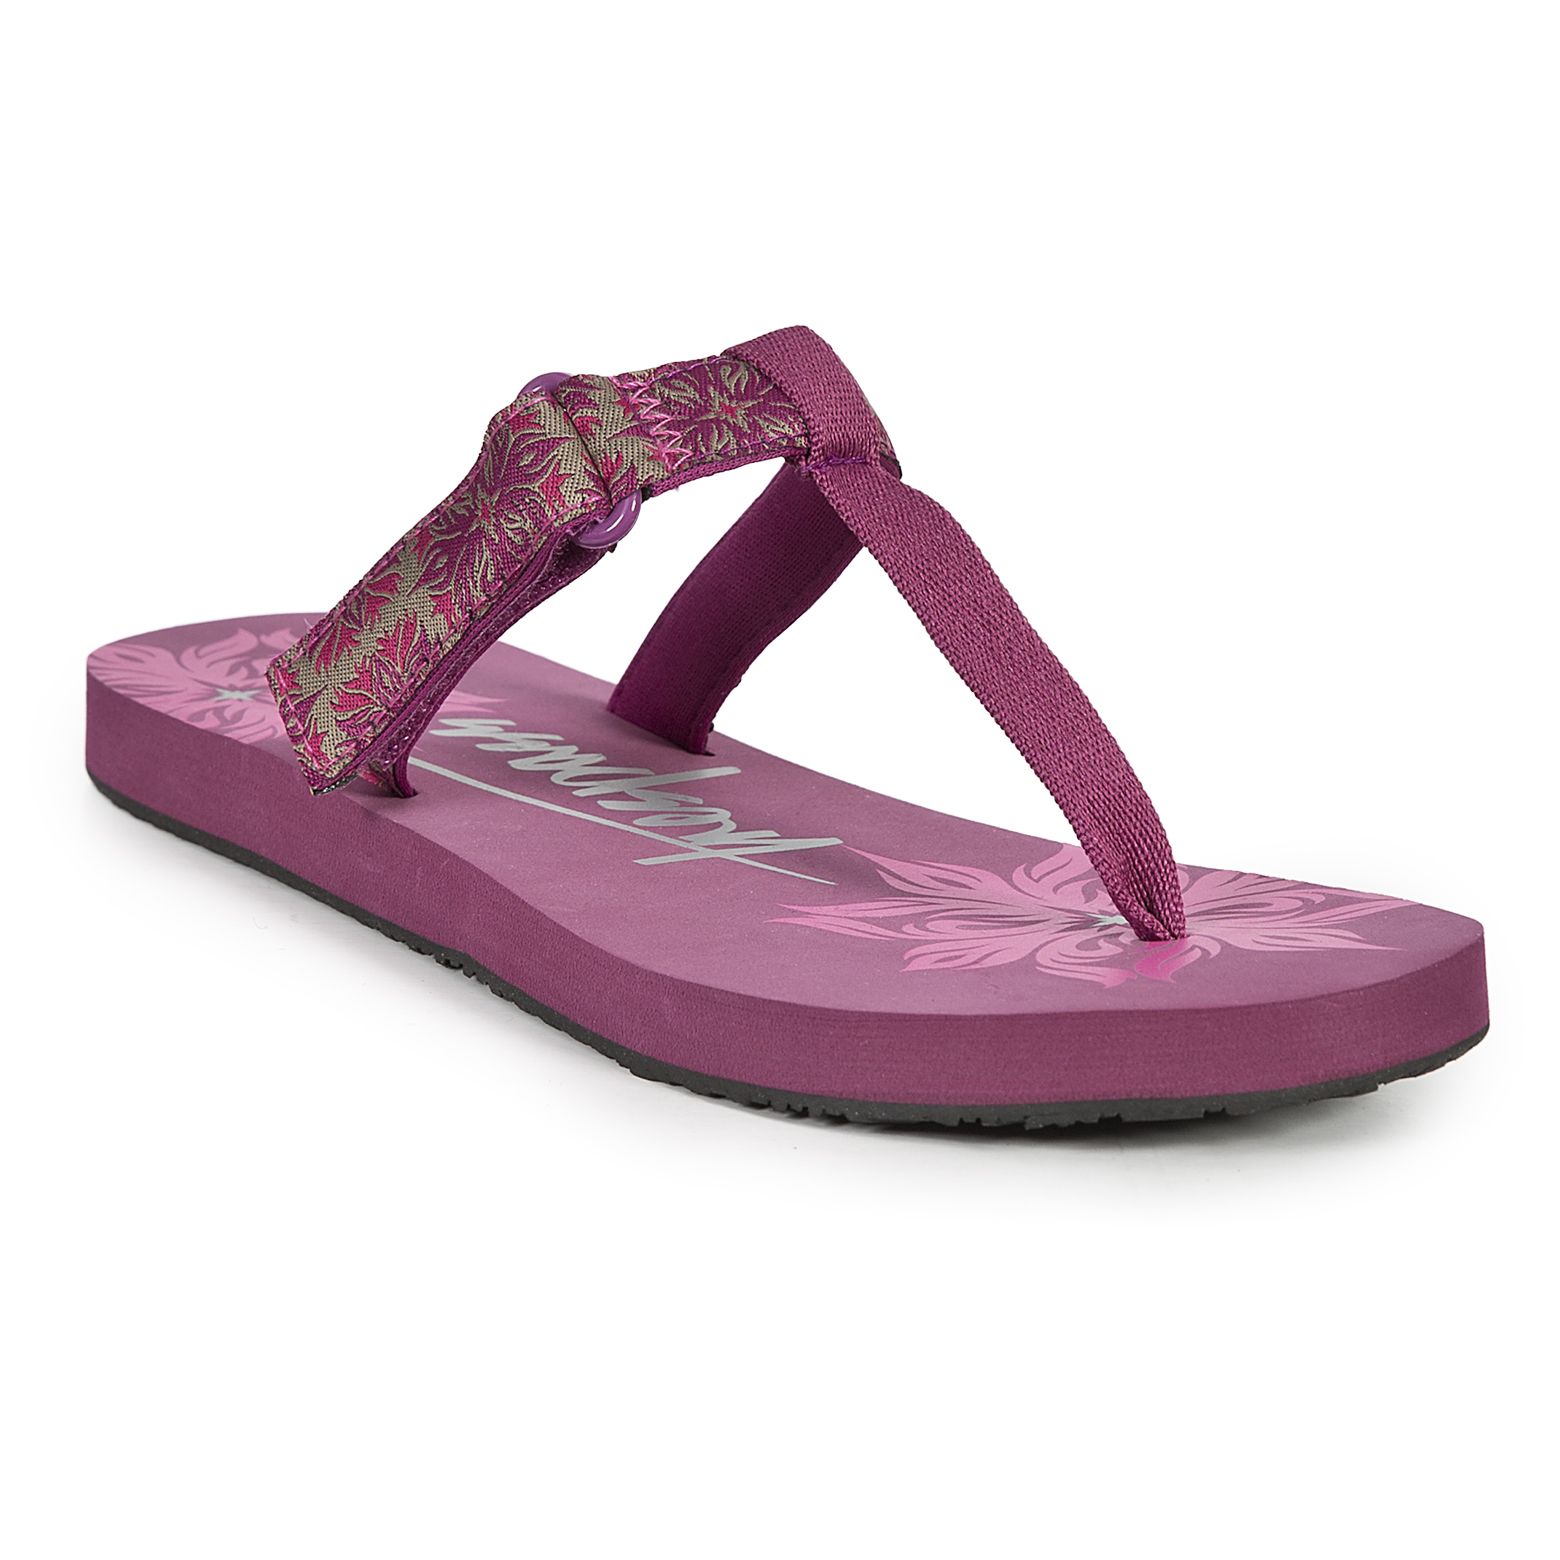 Panora Womens Velcro Flip Flops